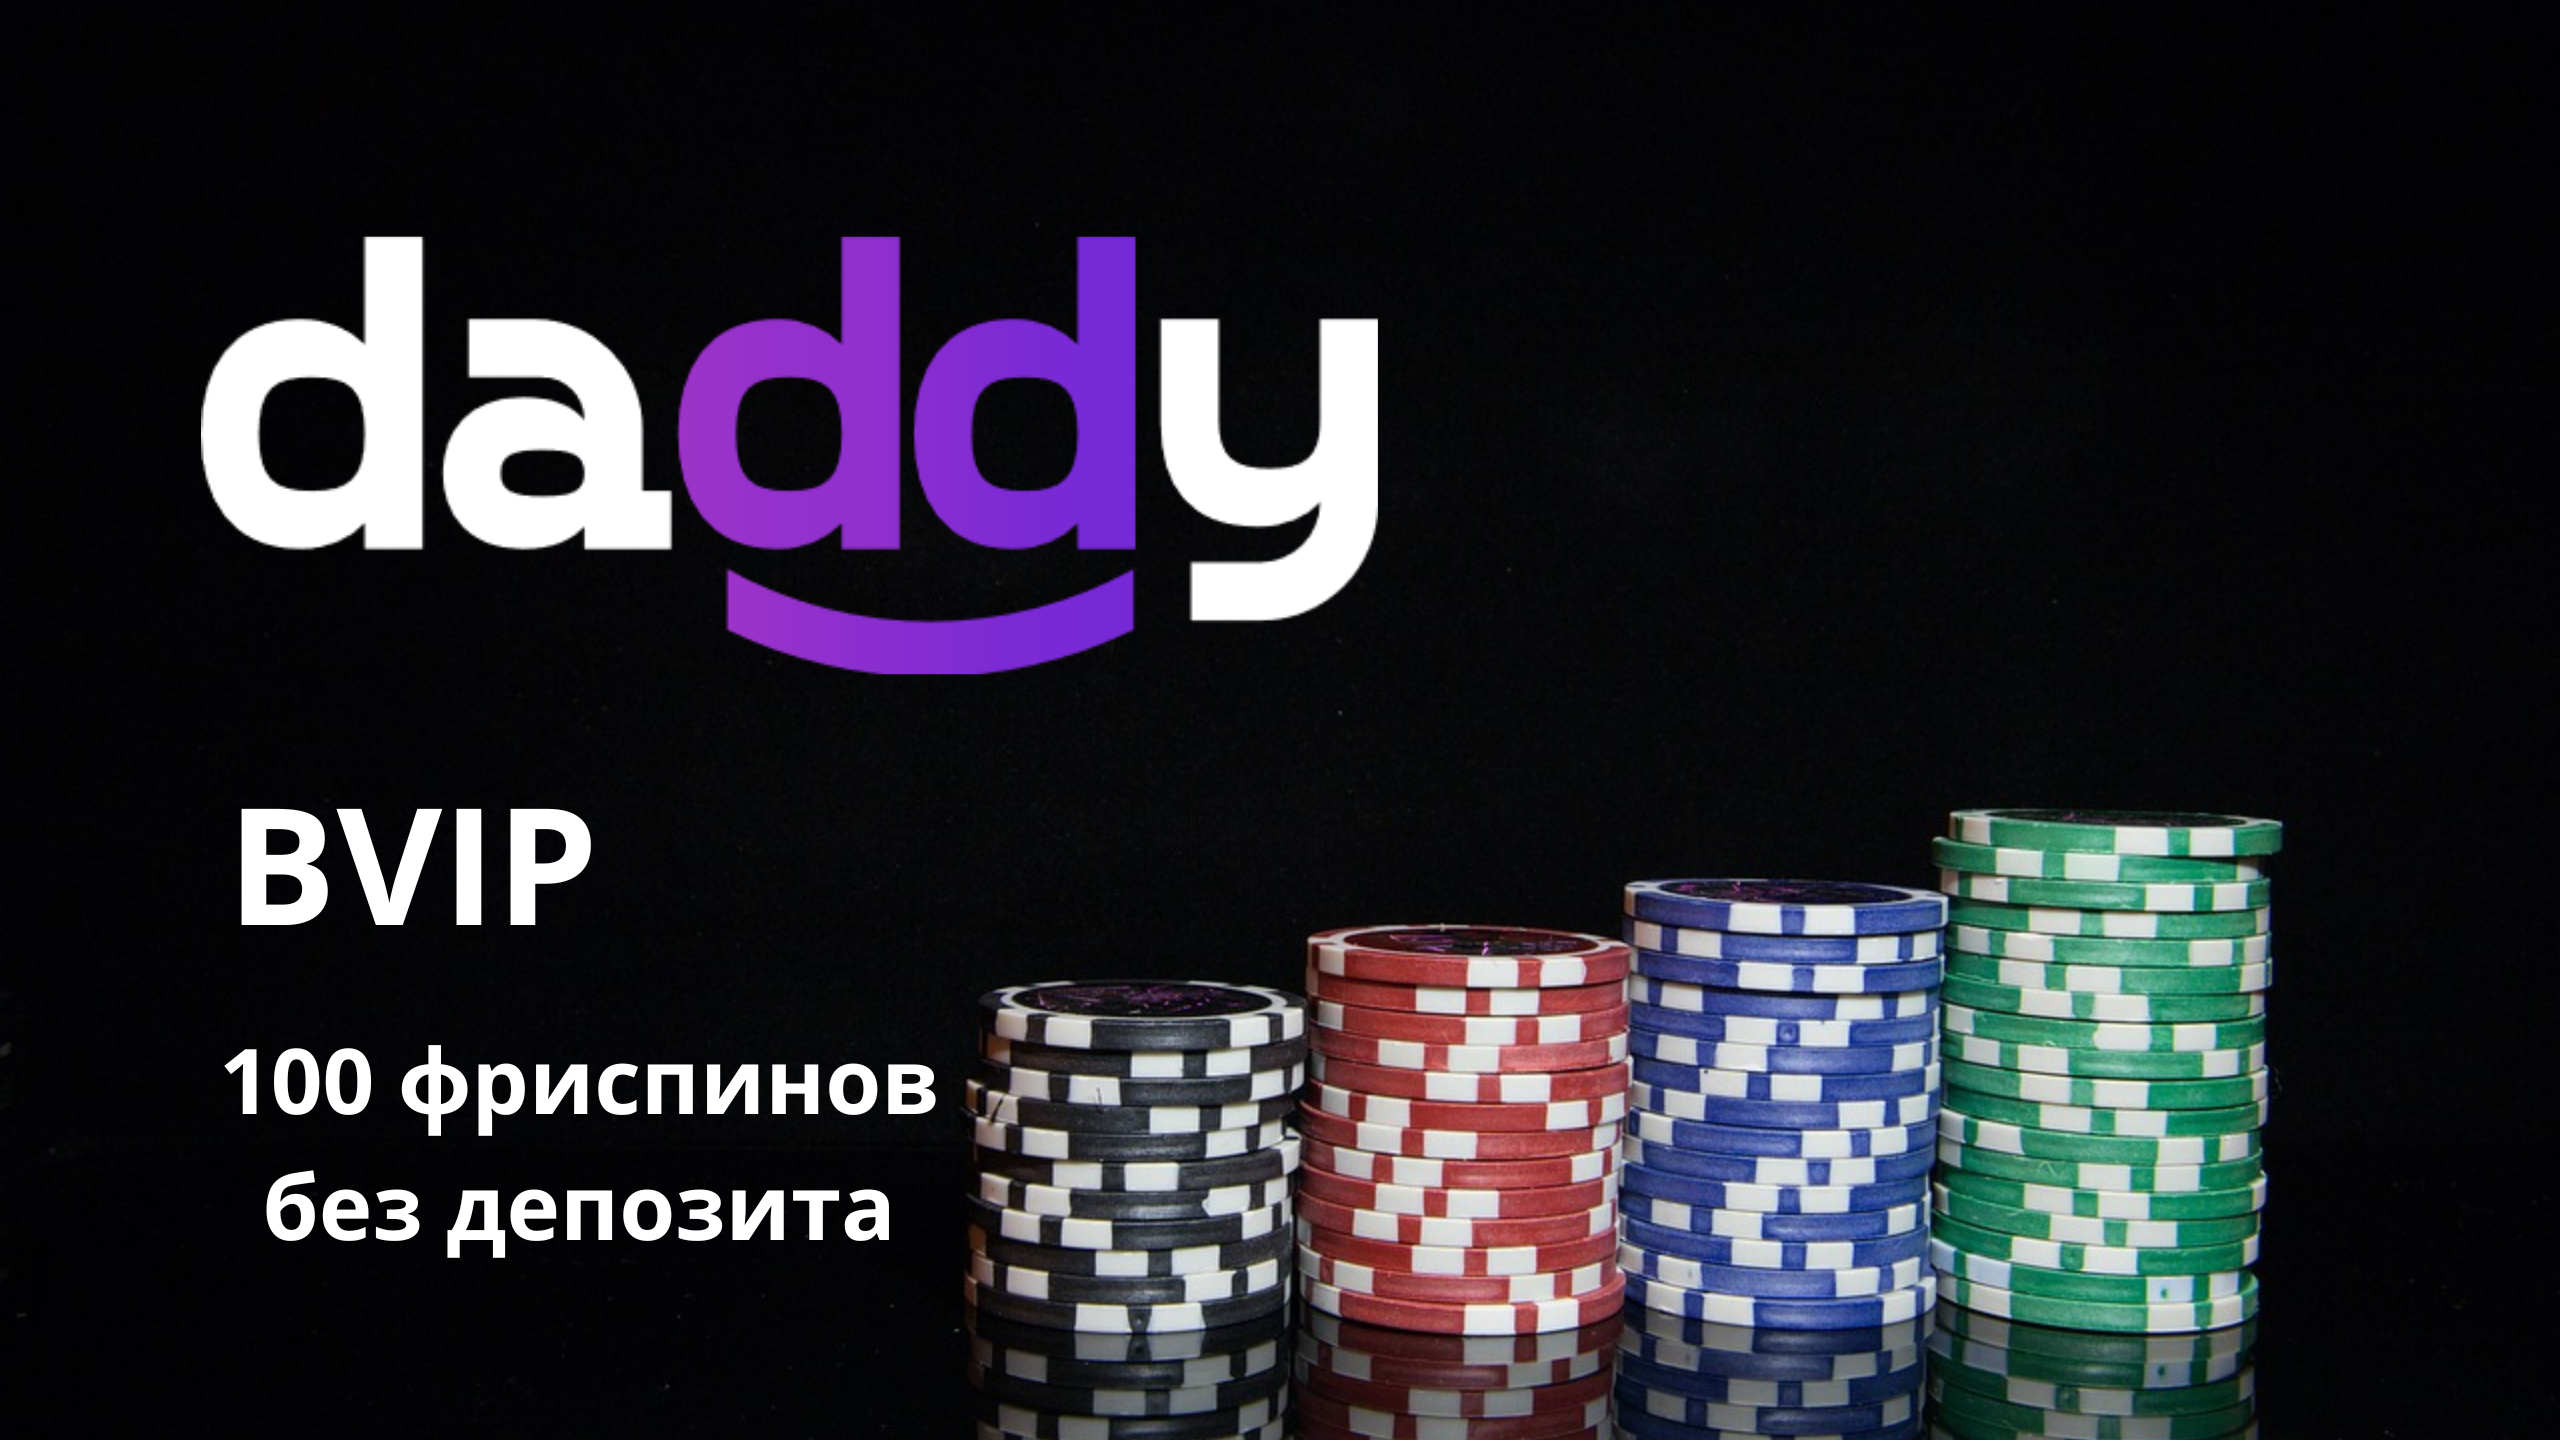 Casino daddy daddy casino site net ru